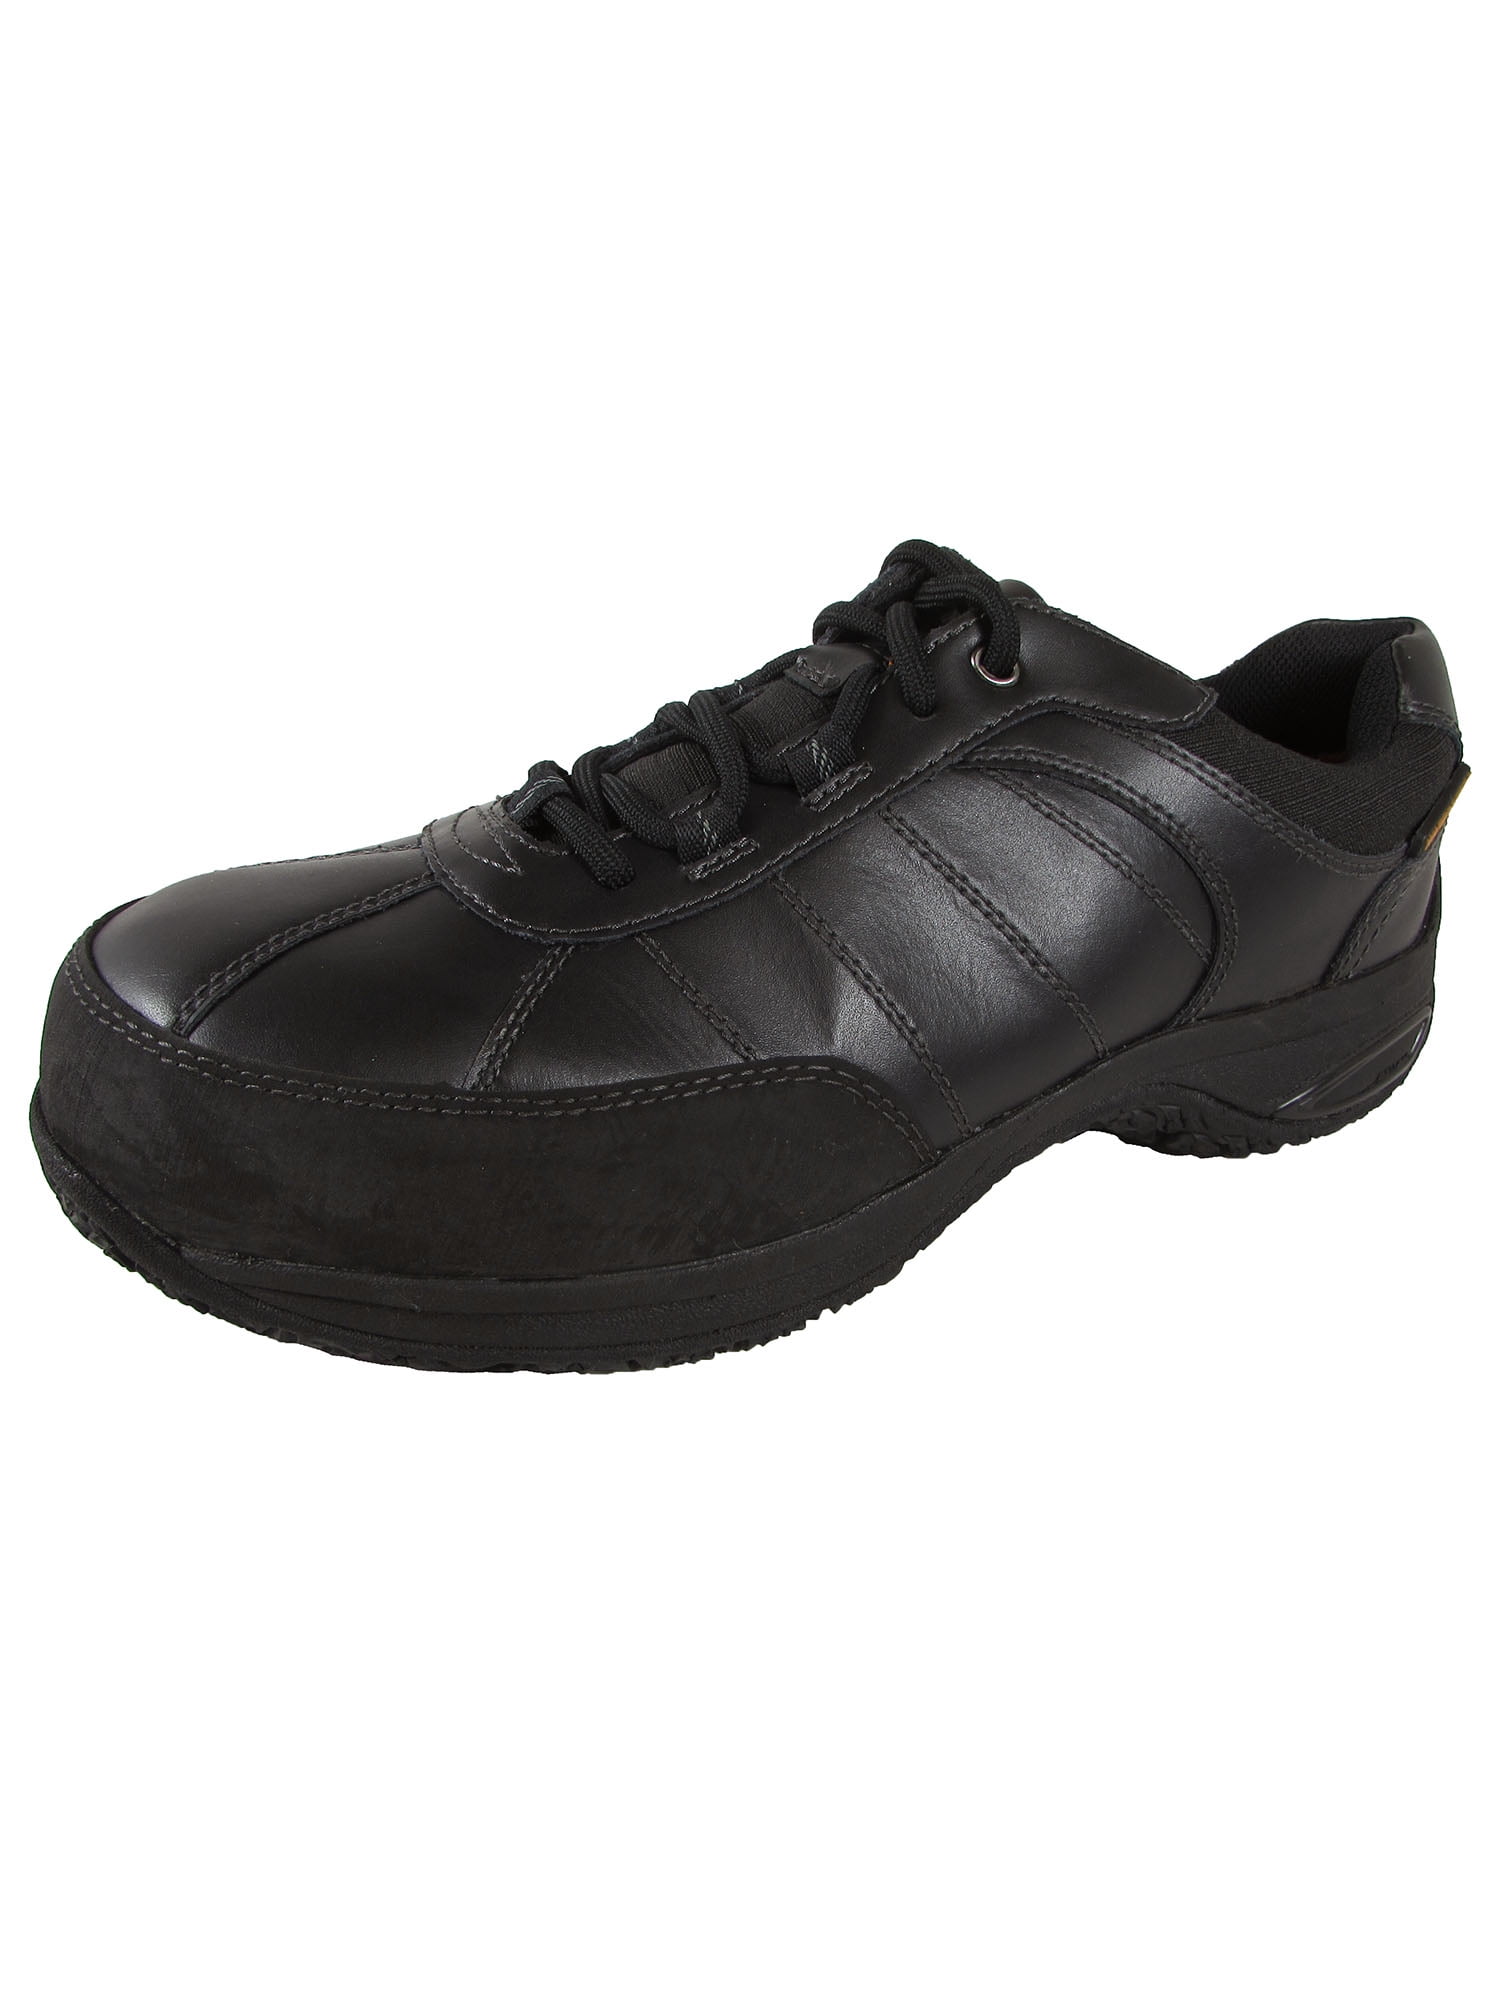 Dunham - Dunham Mens Lexington Steel Toe Lace Up Shoes - Walmart.com ...